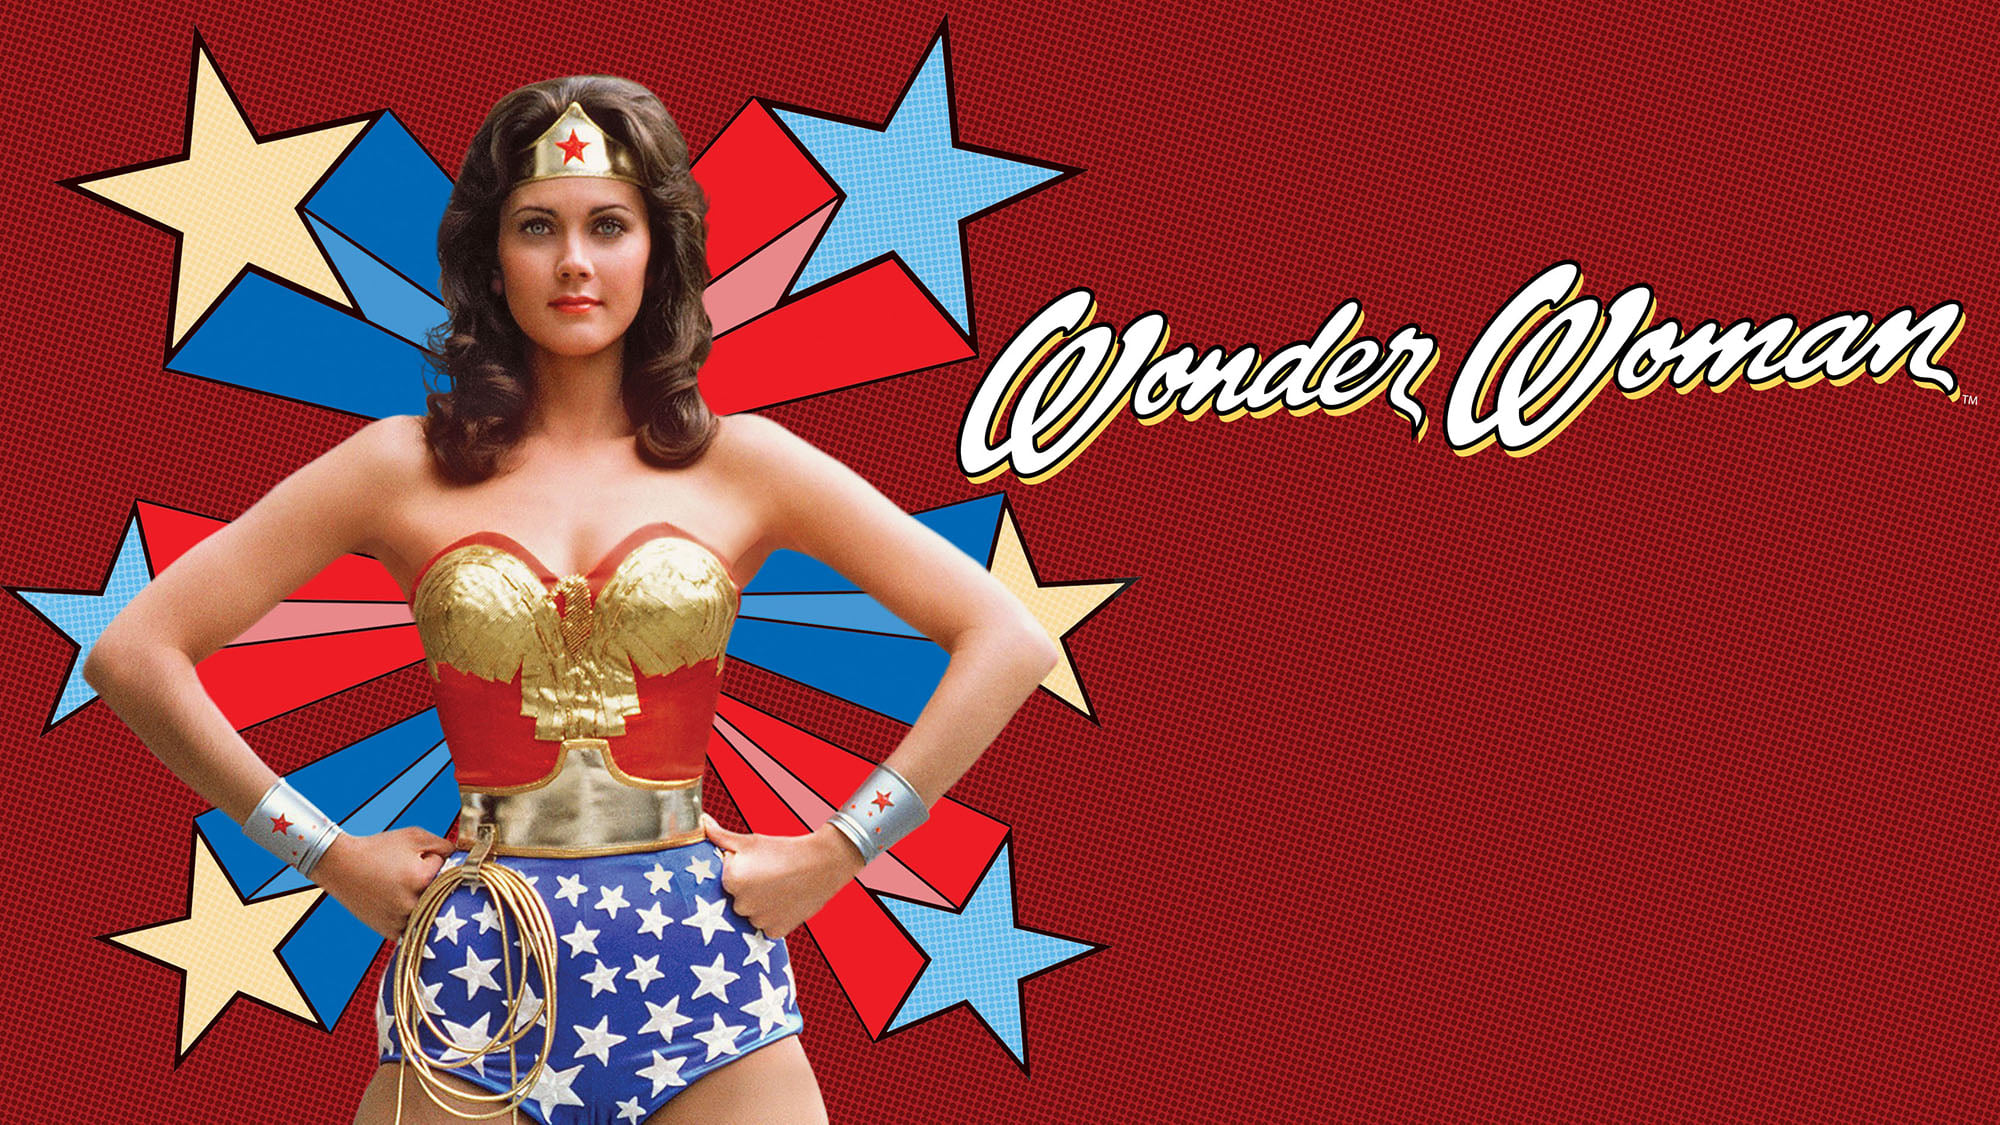 Wonder Woman: reviews, news, and analysis - Vox